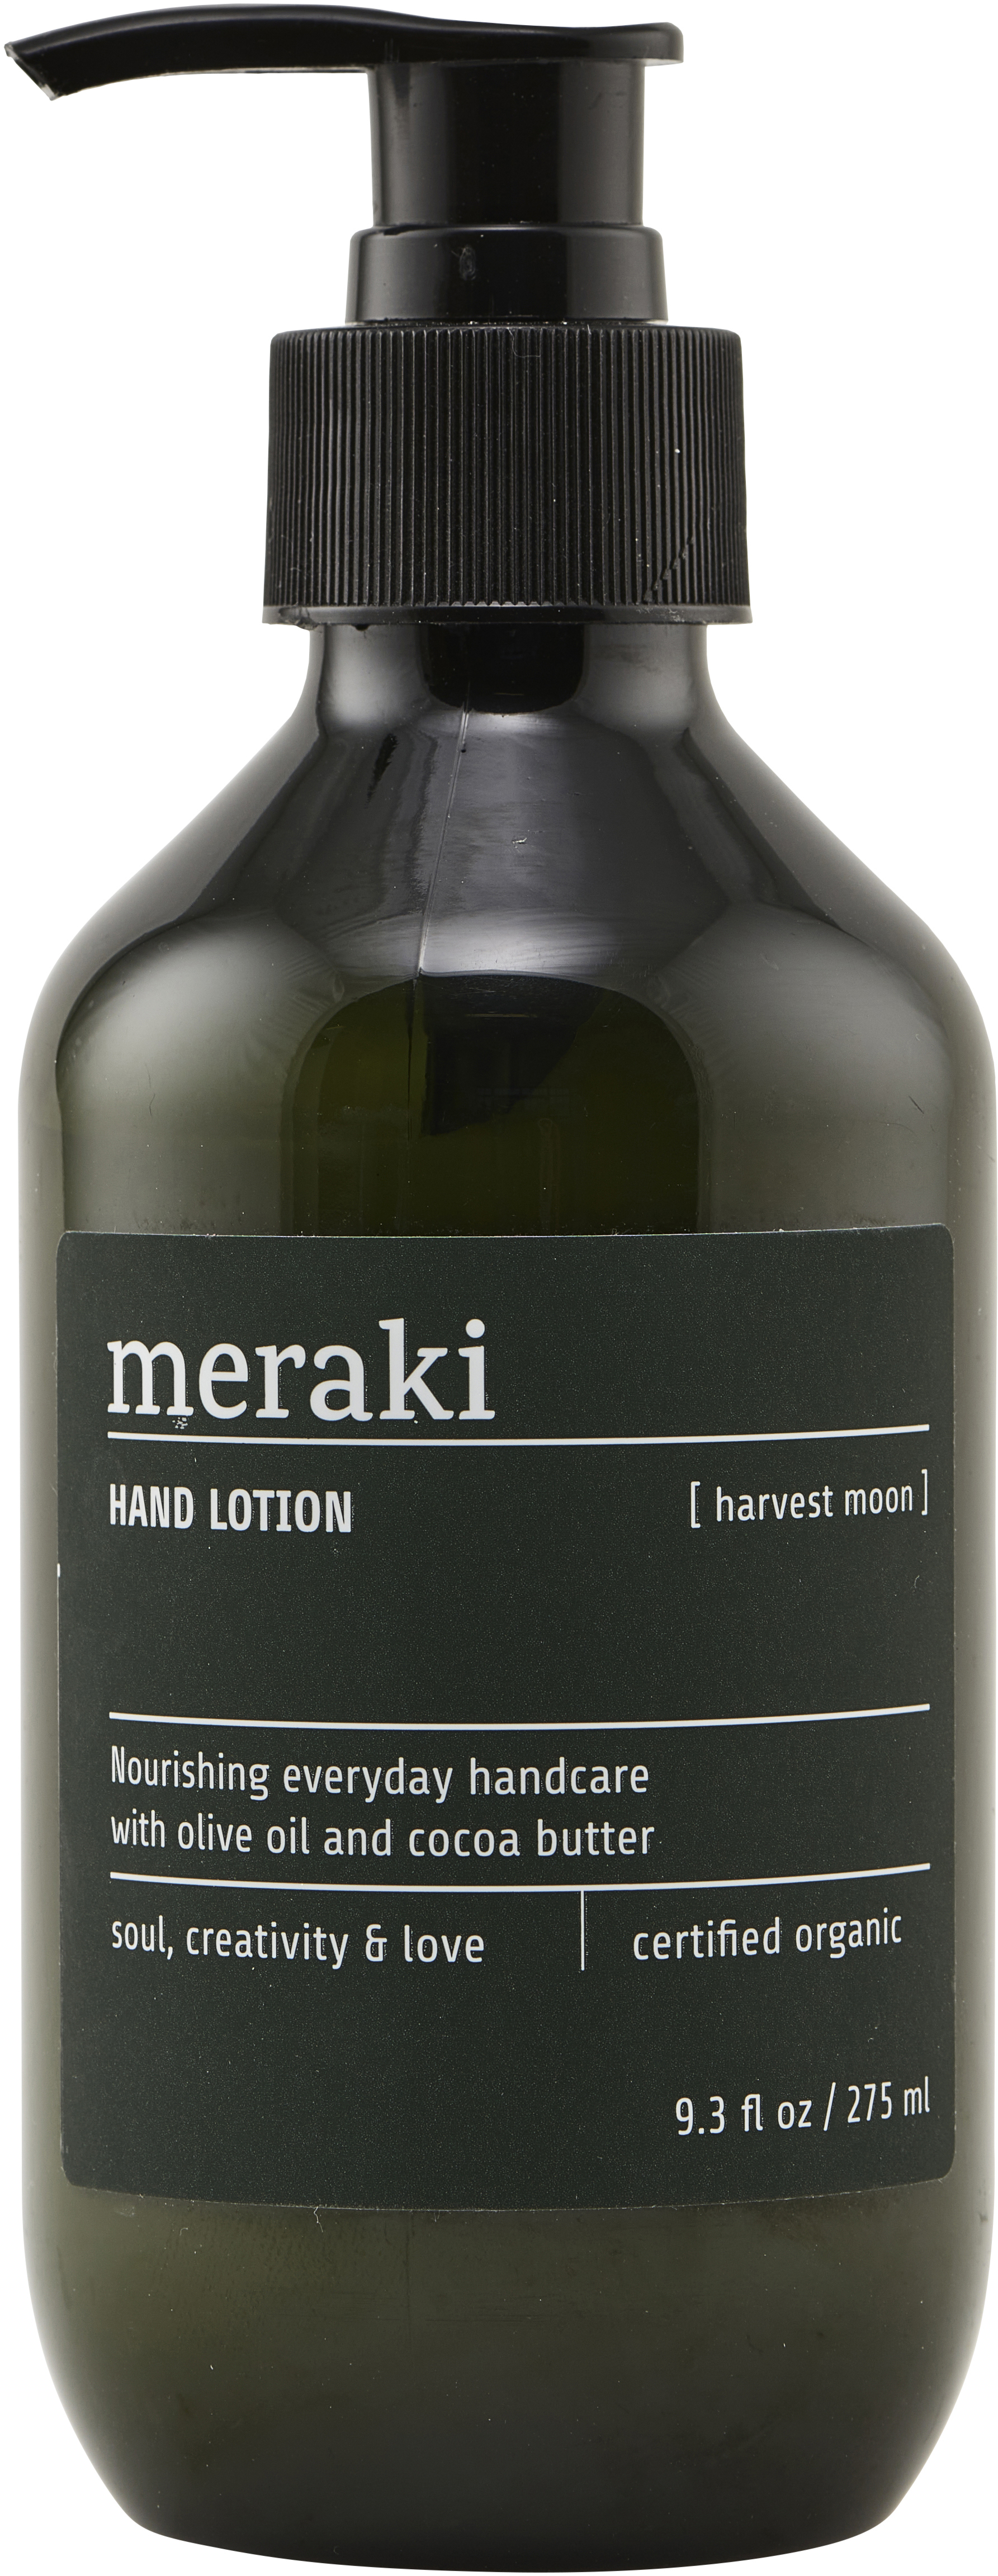 Meraki Harvest moon Hand Lotion 275 ml